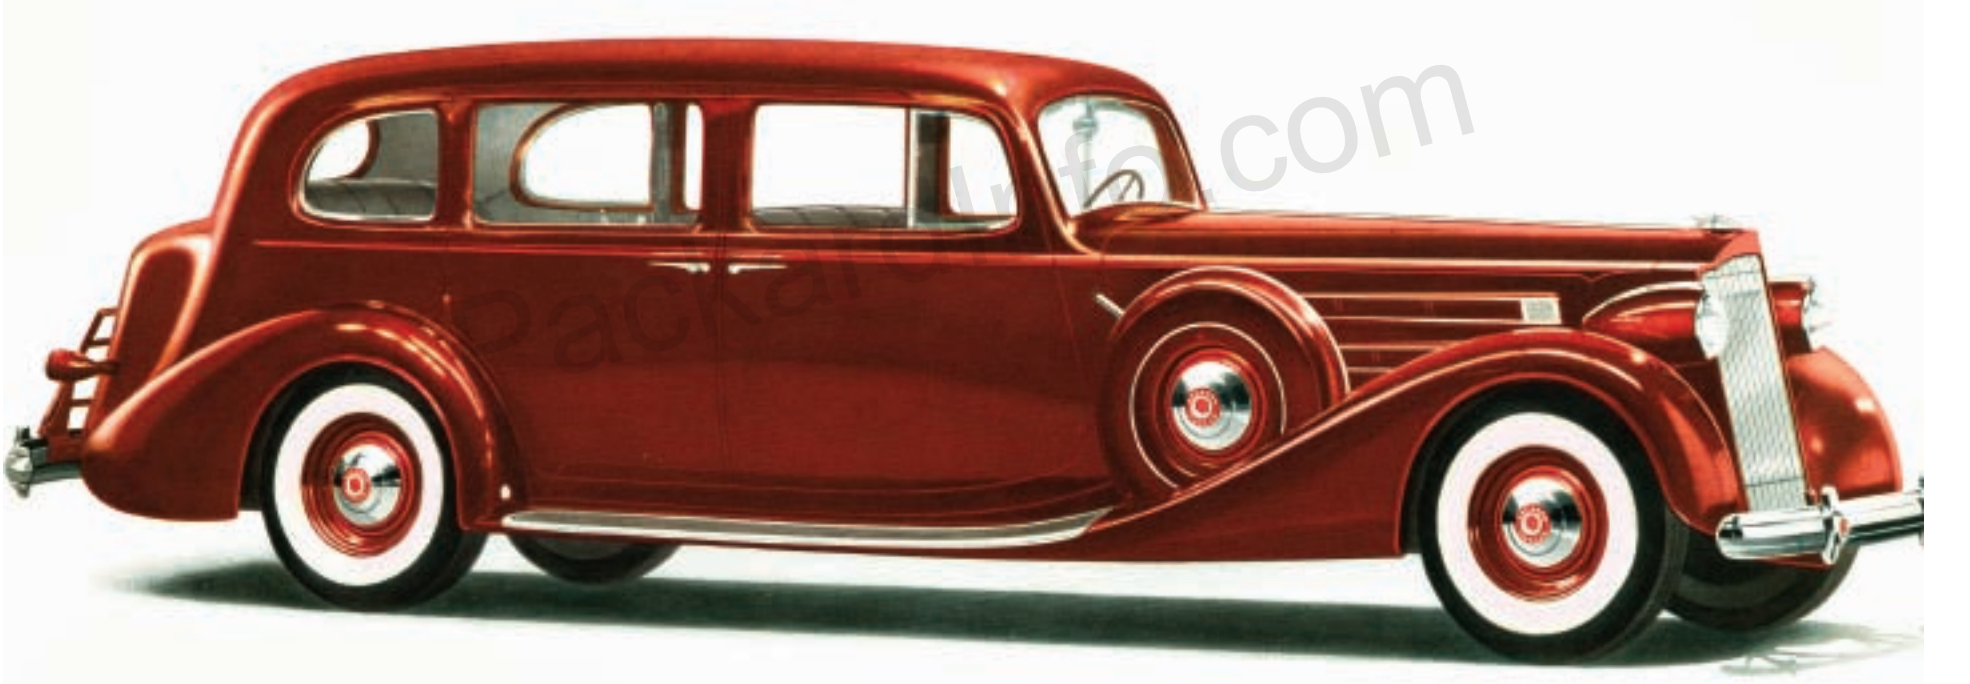 1937 15th 1034 Twelve Touring Sedan